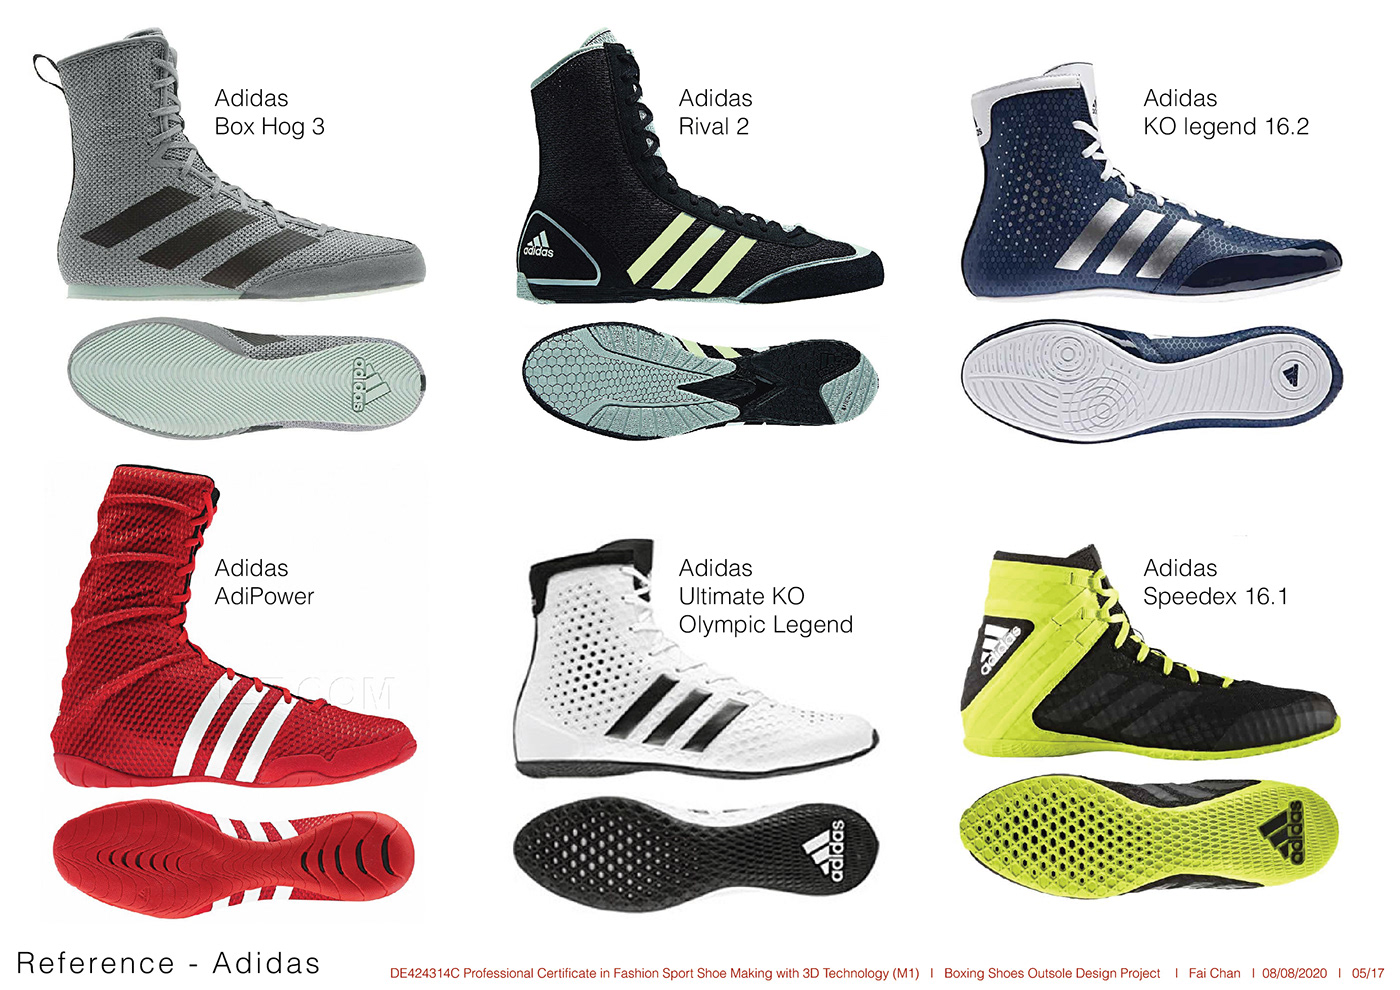 boxing shoes design footwear design OUTSOLE DESIGN Sneaker Design